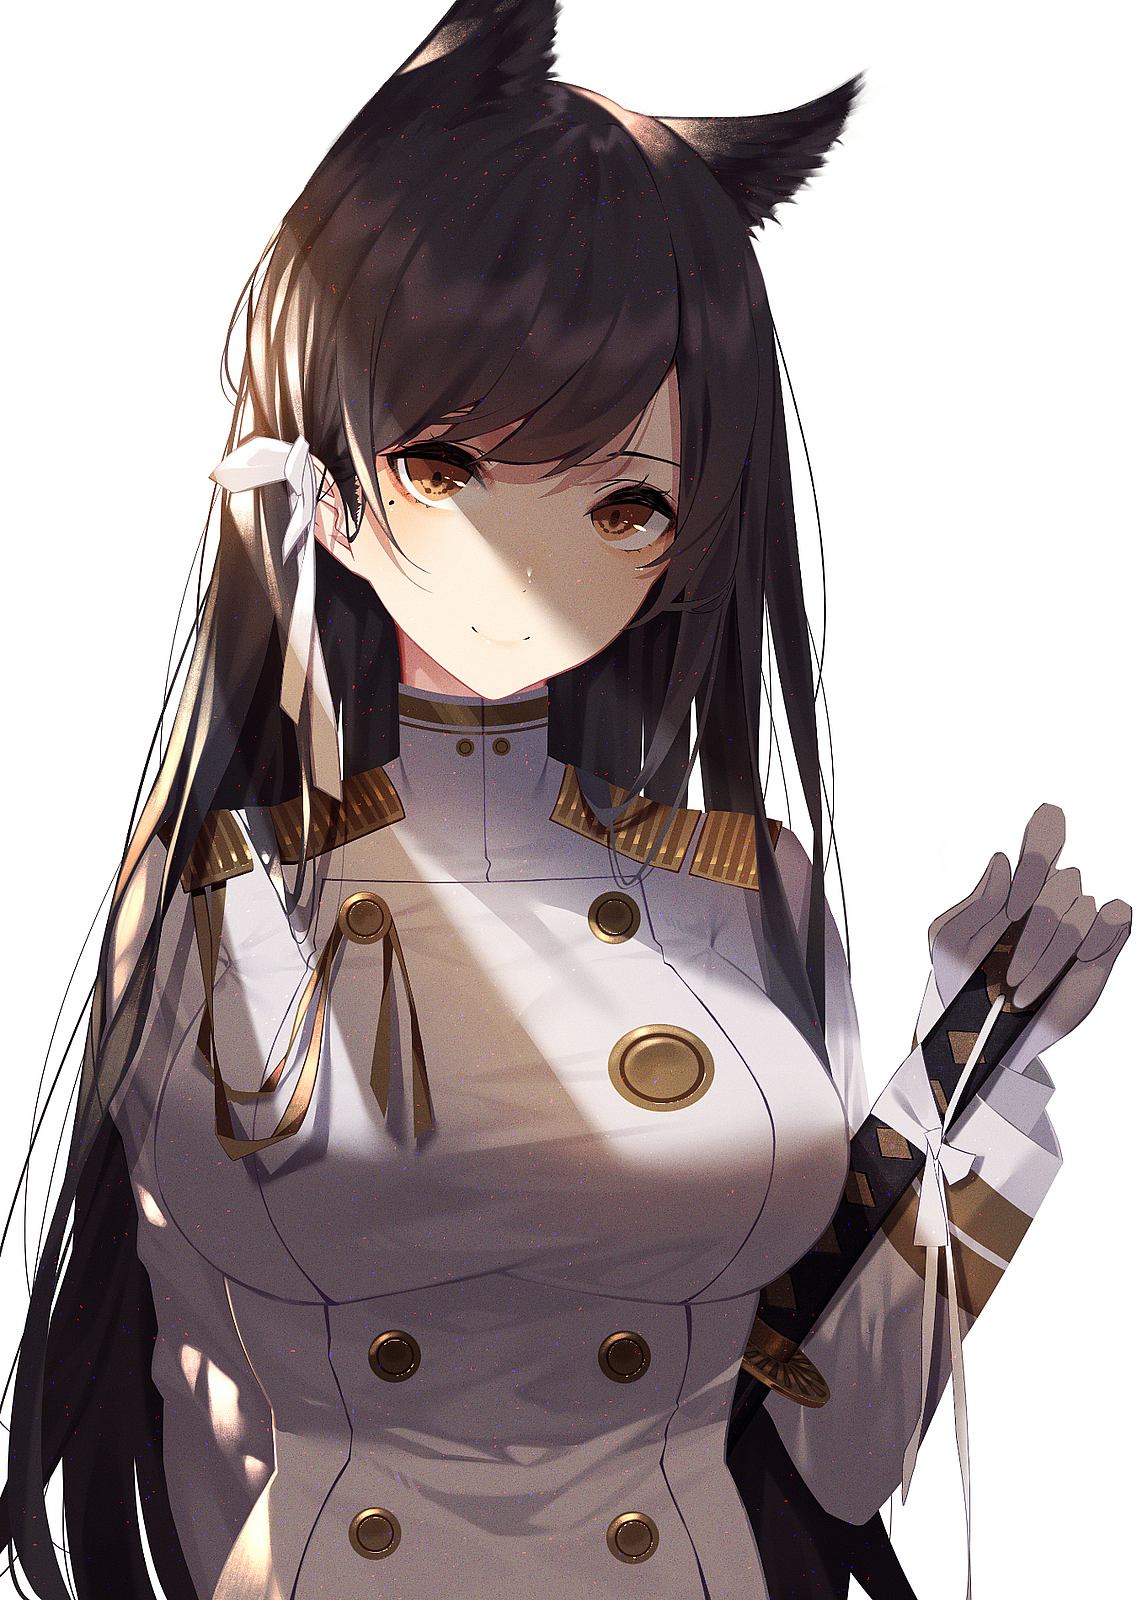 Cute military girl Atago (anime girl): Azur Lane (Artist: Kisui (user wswf3235))